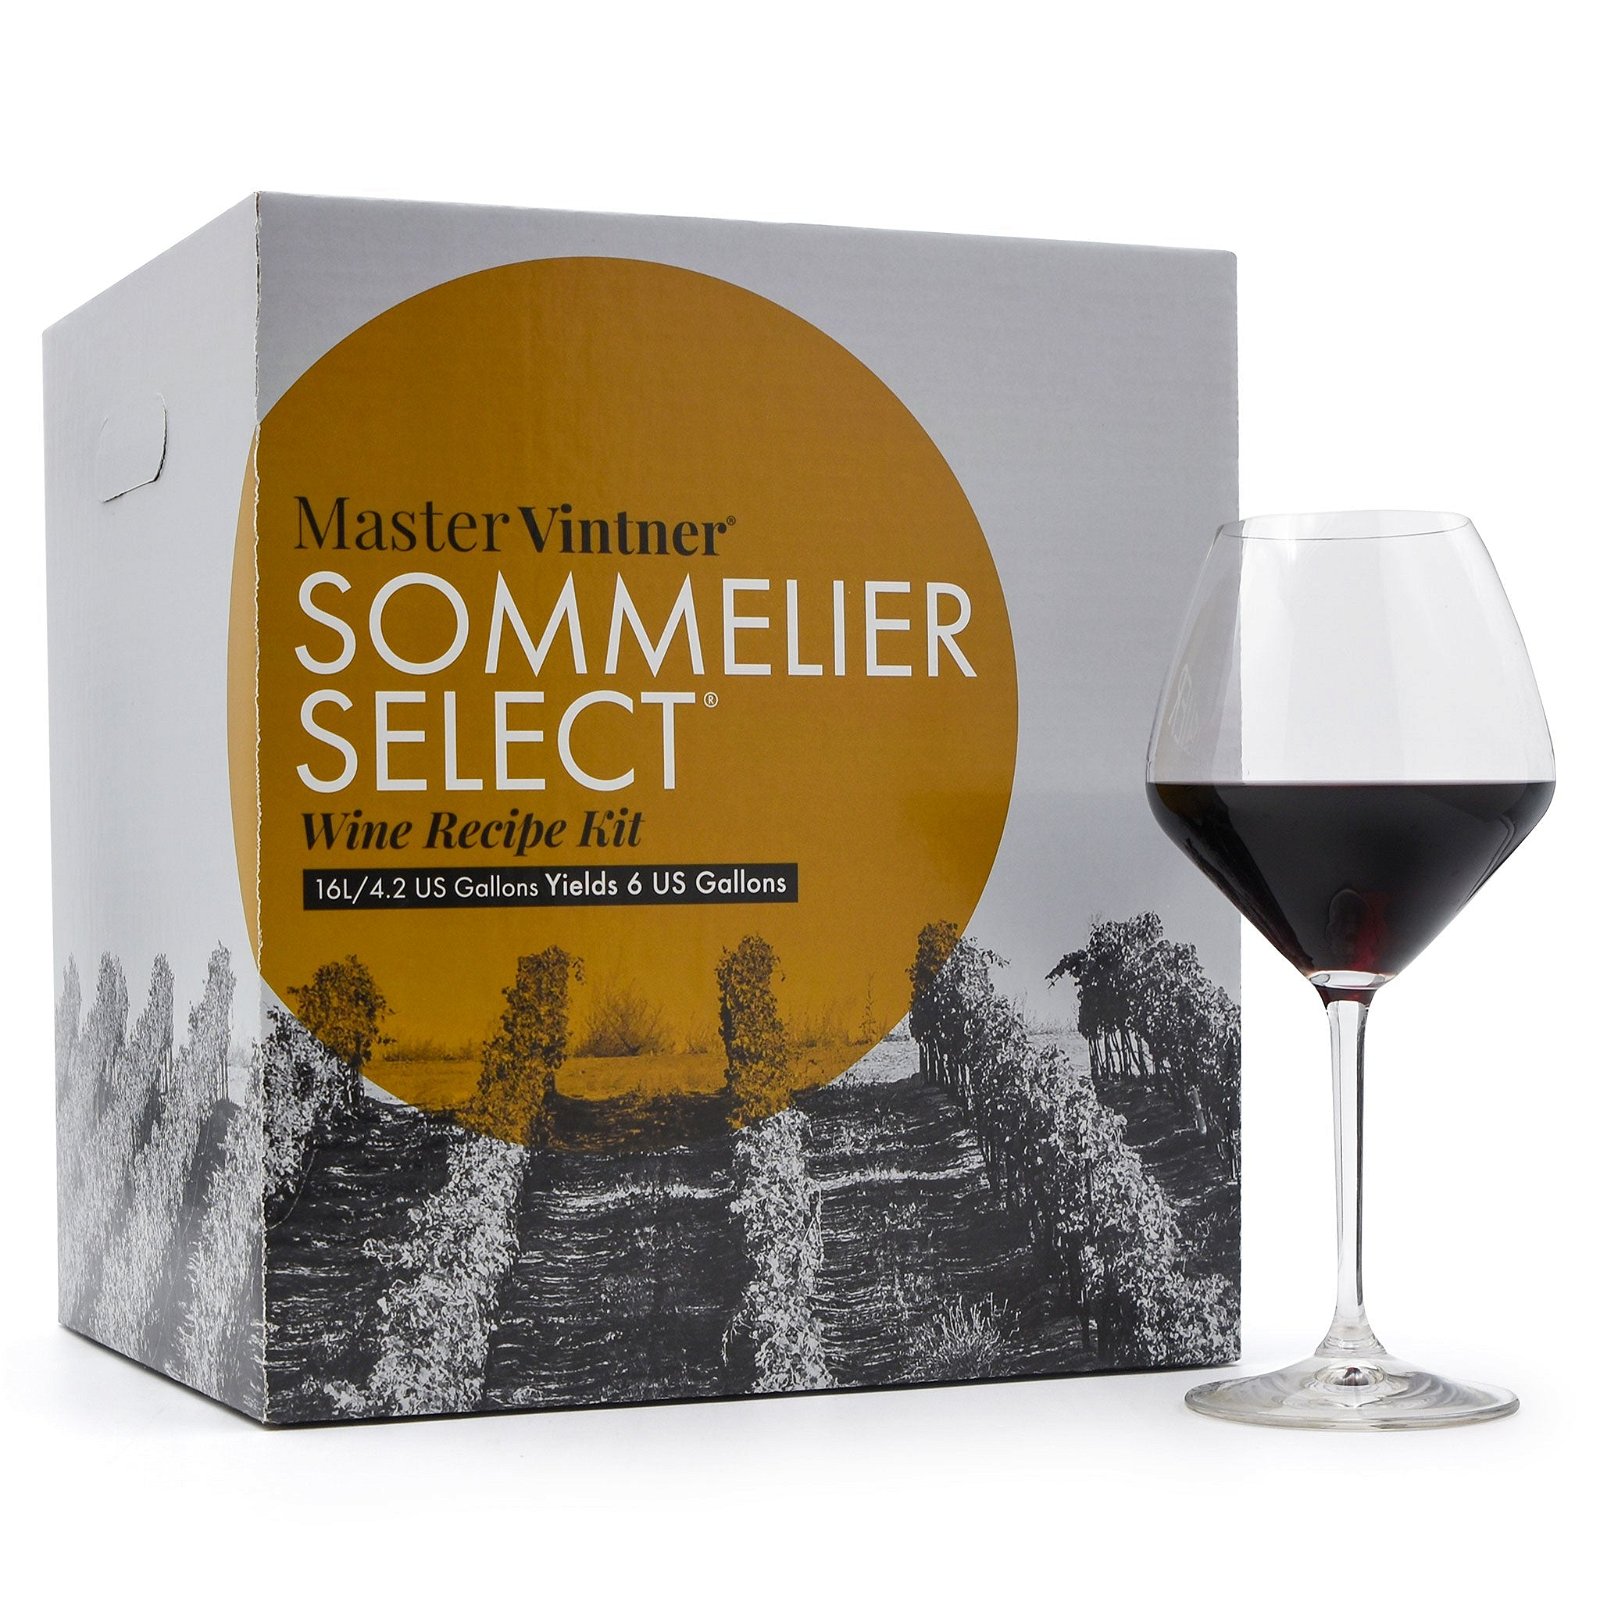 Master Vintner® Sommelier Select Wine Recipe Kits